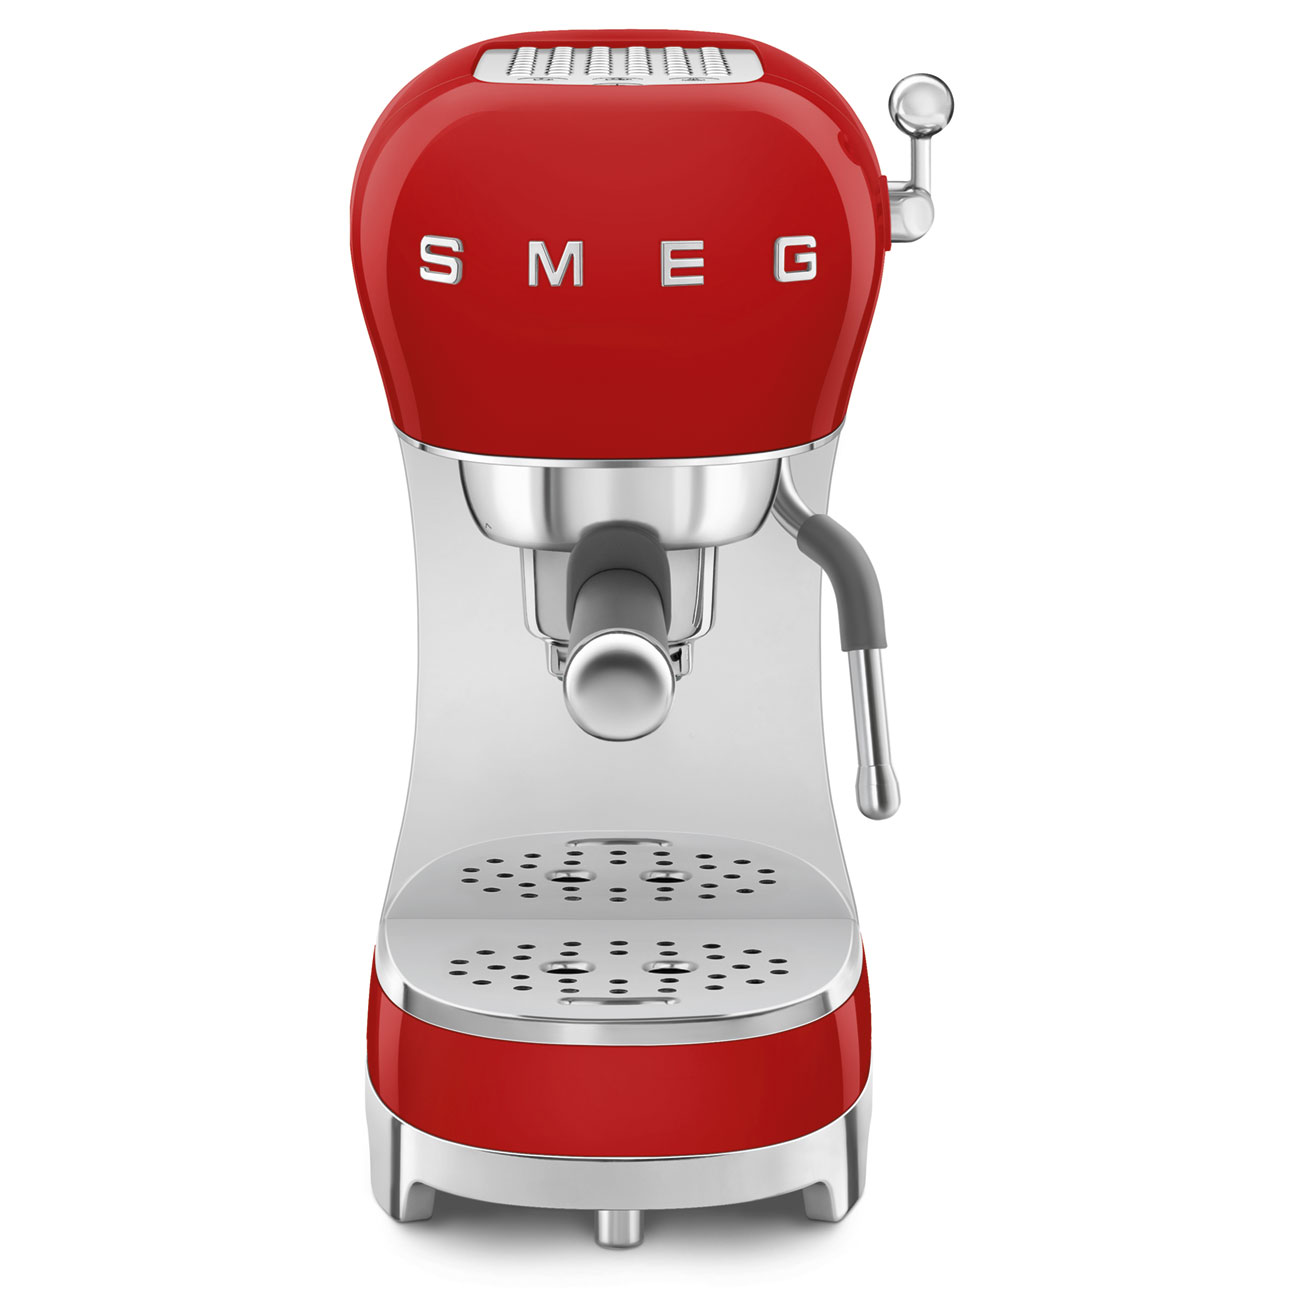 Smeg Red Espresso Manual Coffee Machine with Steam Wand_1